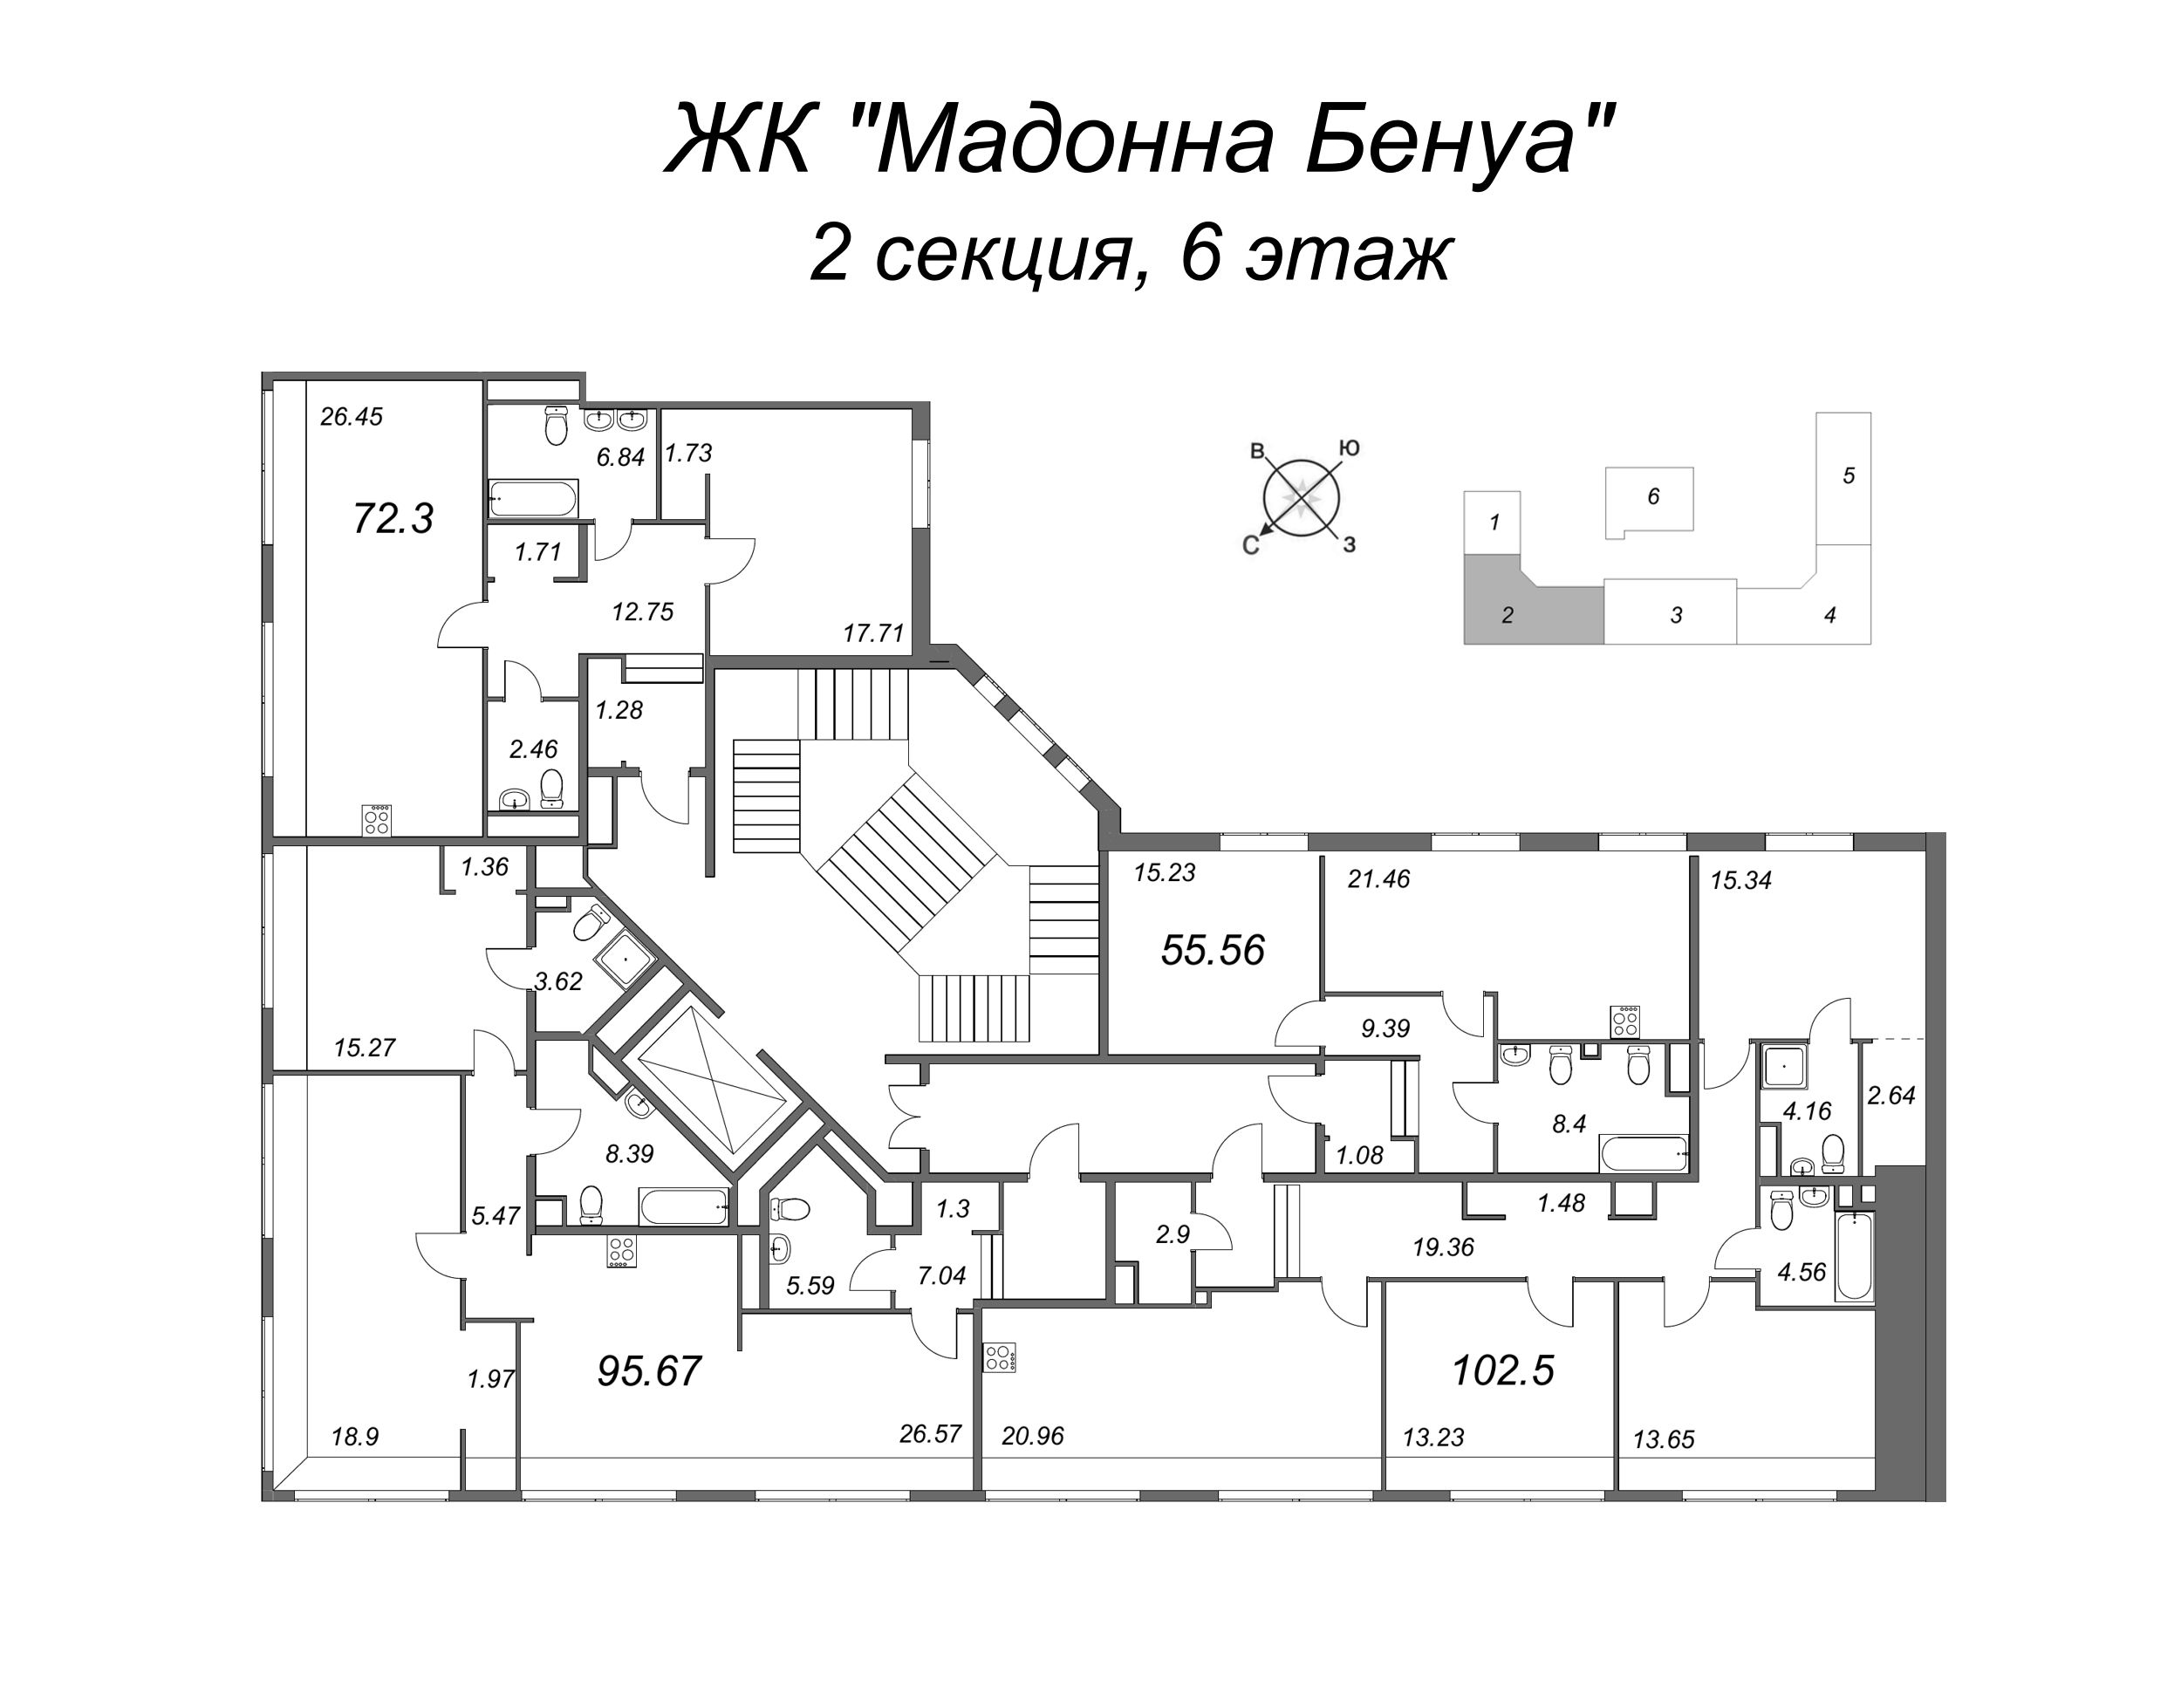 2-комнатная (Евро) квартира, 73.9 м² в ЖК "Мадонна Бенуа" - планировка этажа